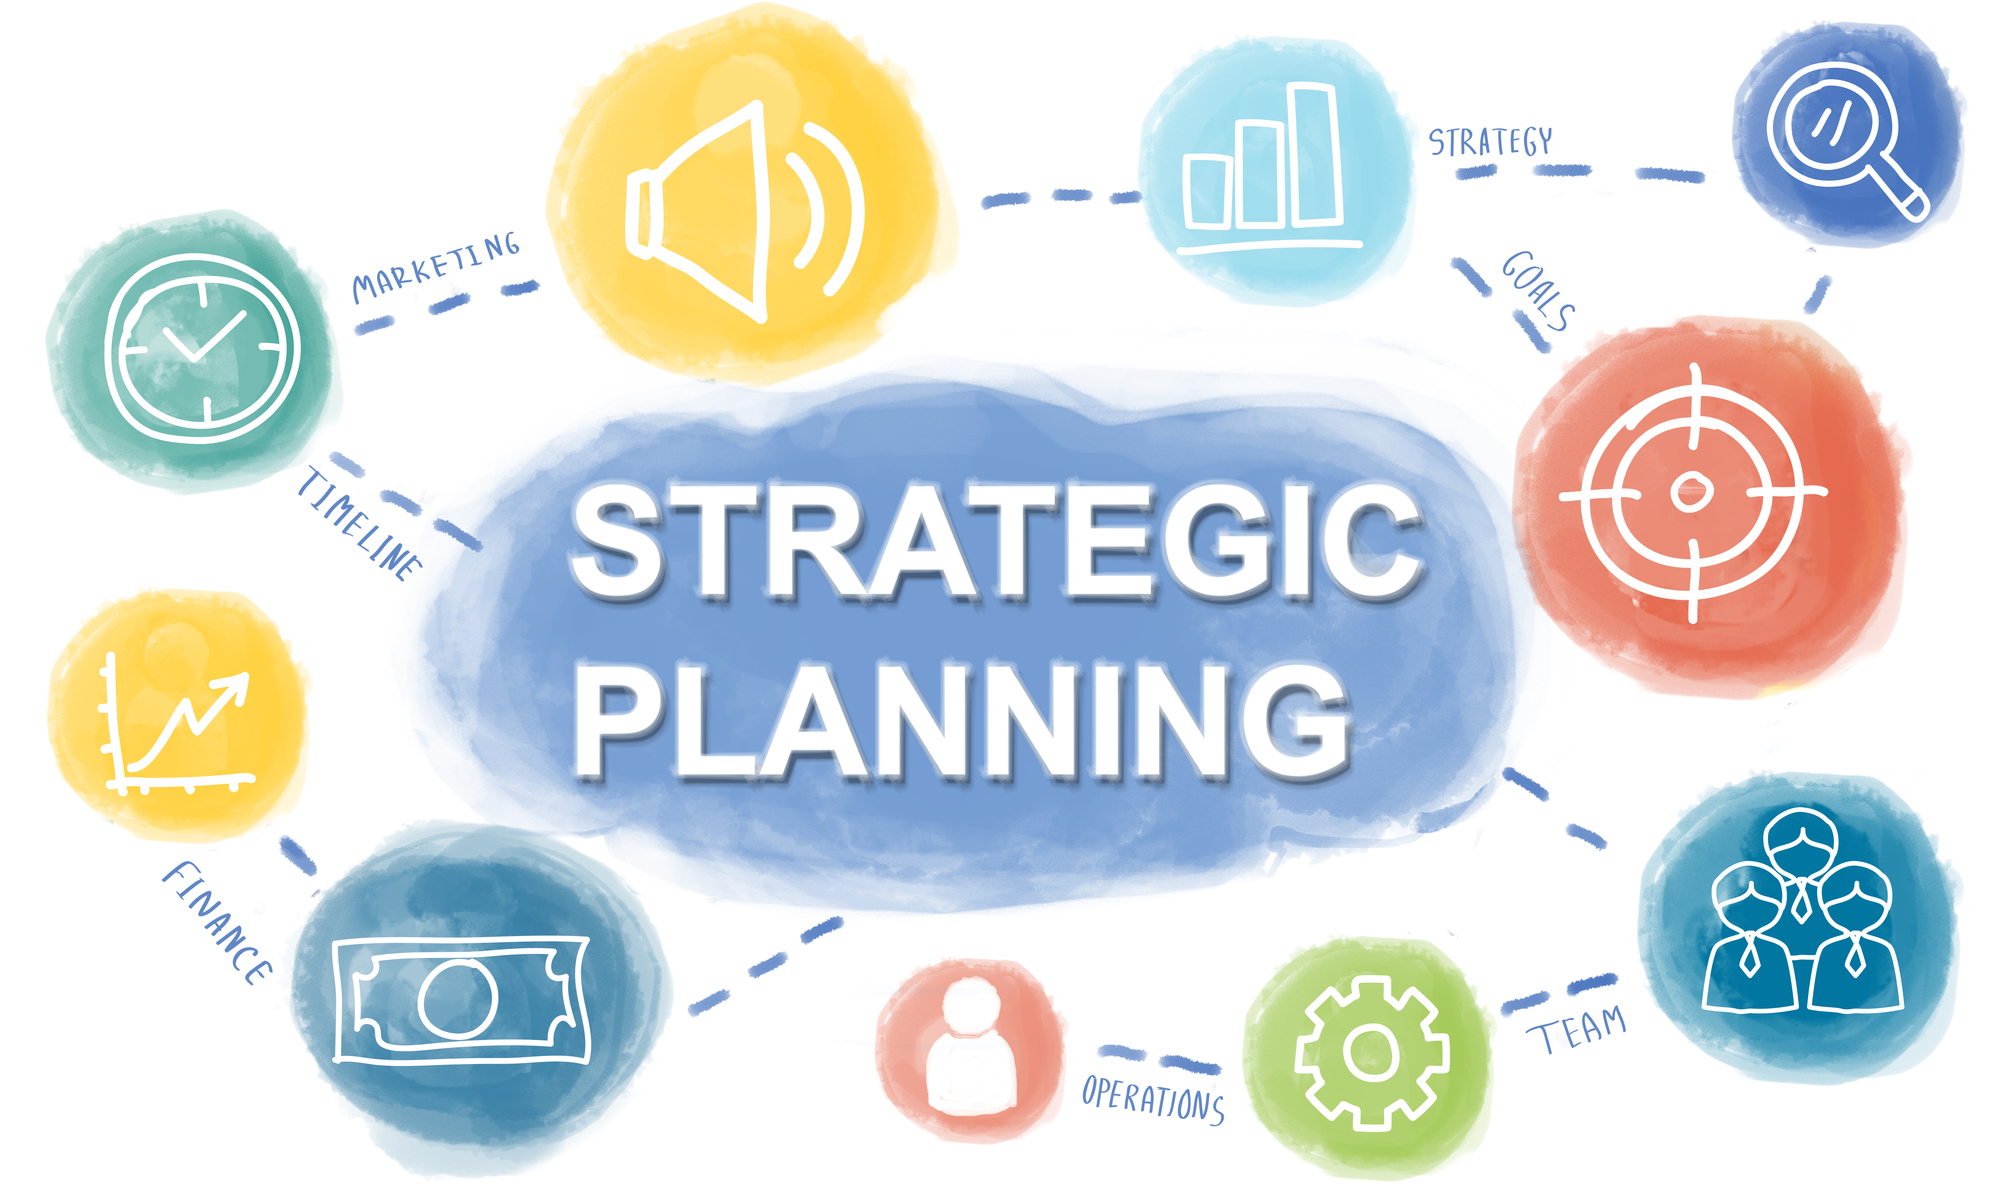 strategic planning definition in education